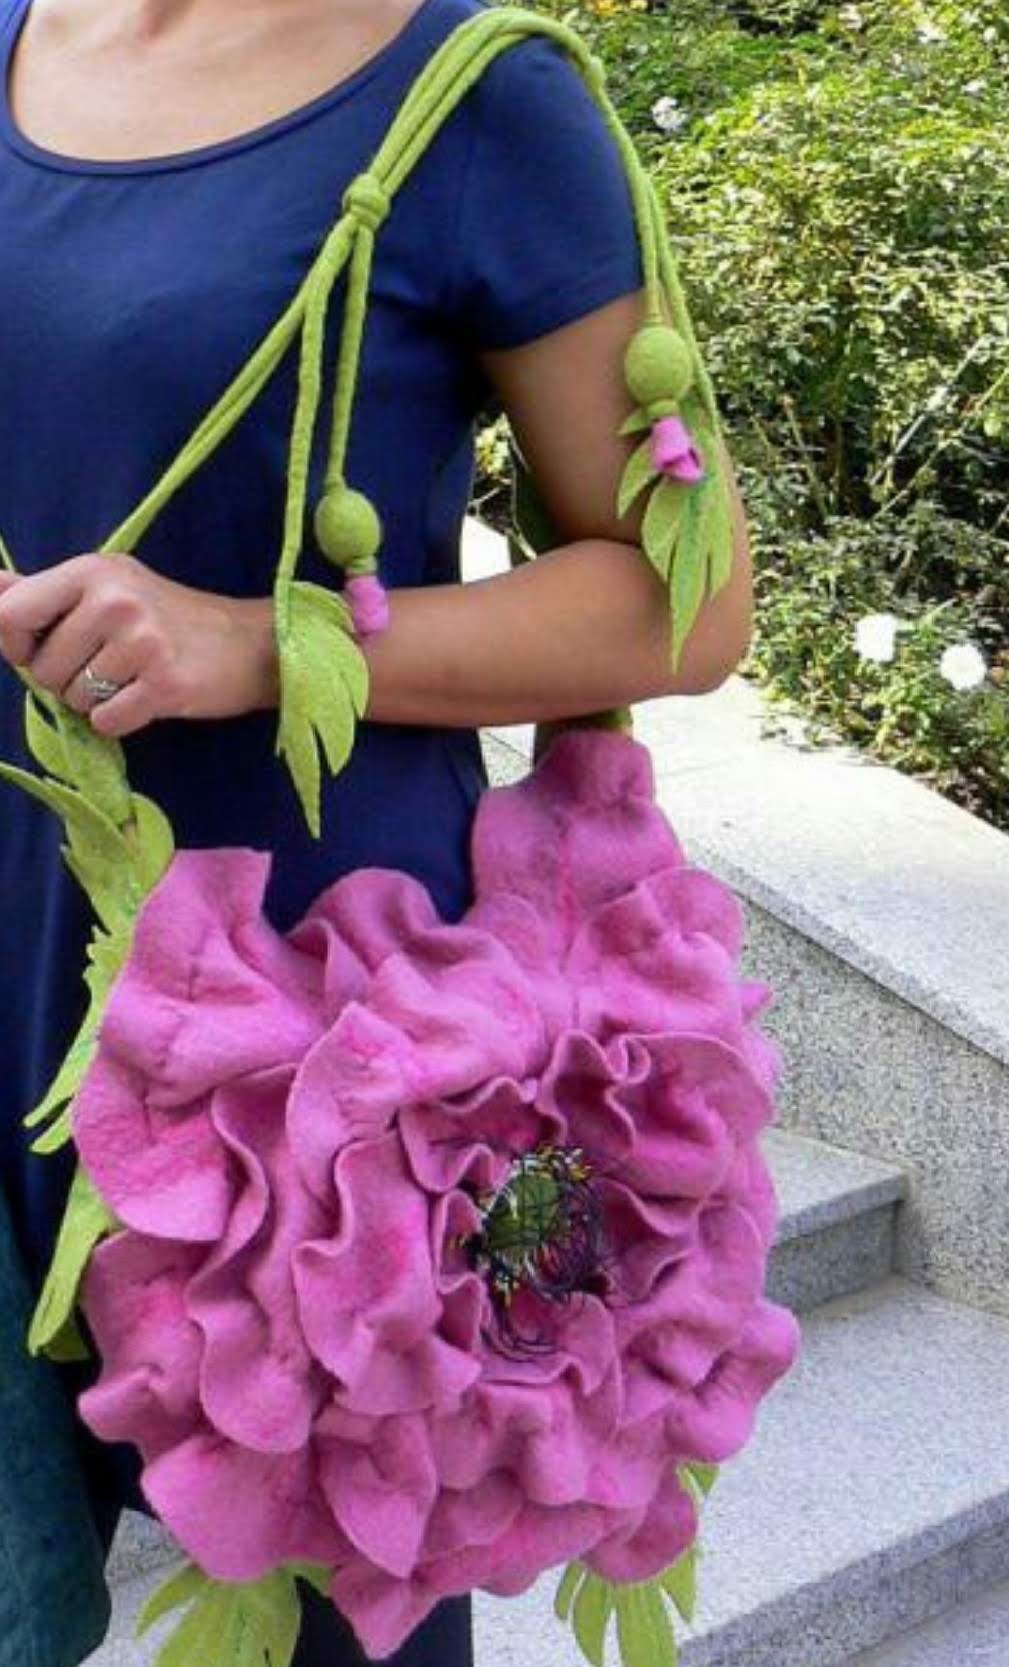 уникальная валяная авторская сумка с цветами